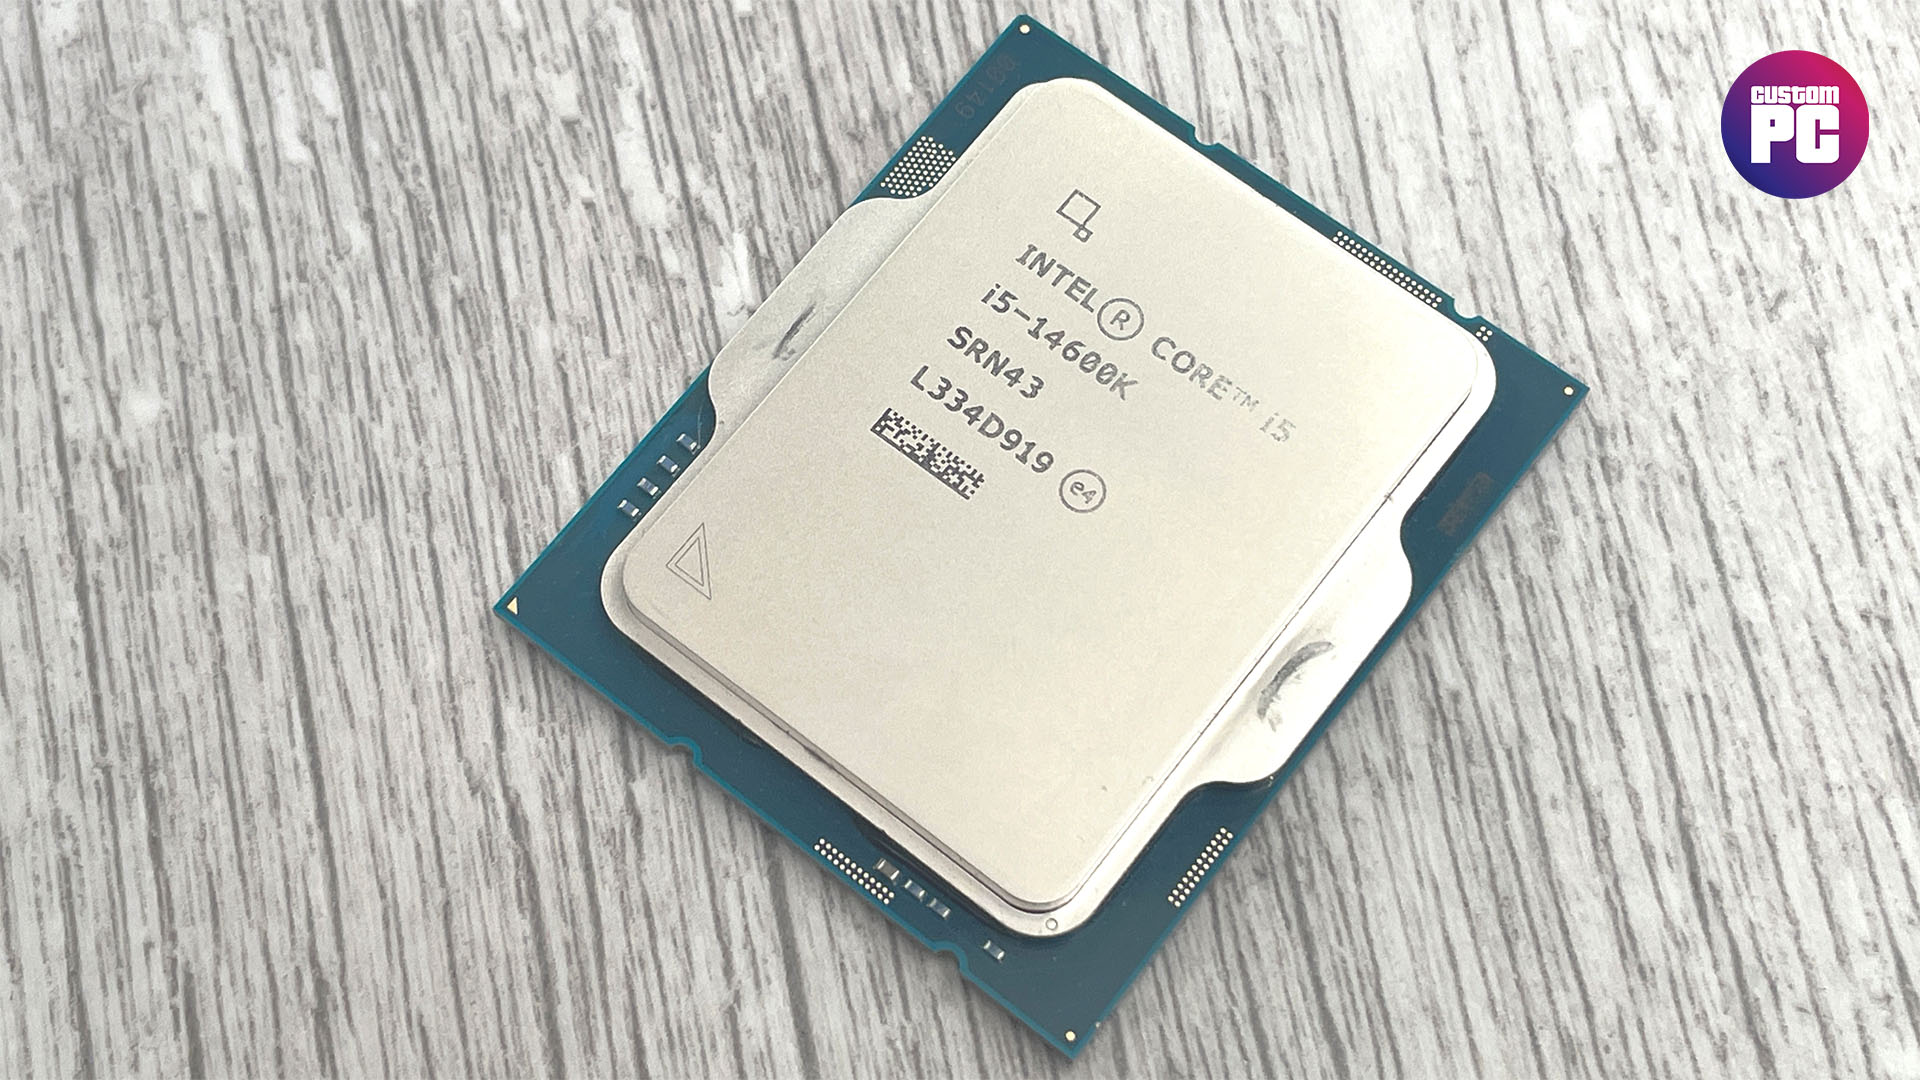 Intel Core I5-12600K Review: The Mid-Range Alder Lake Life 